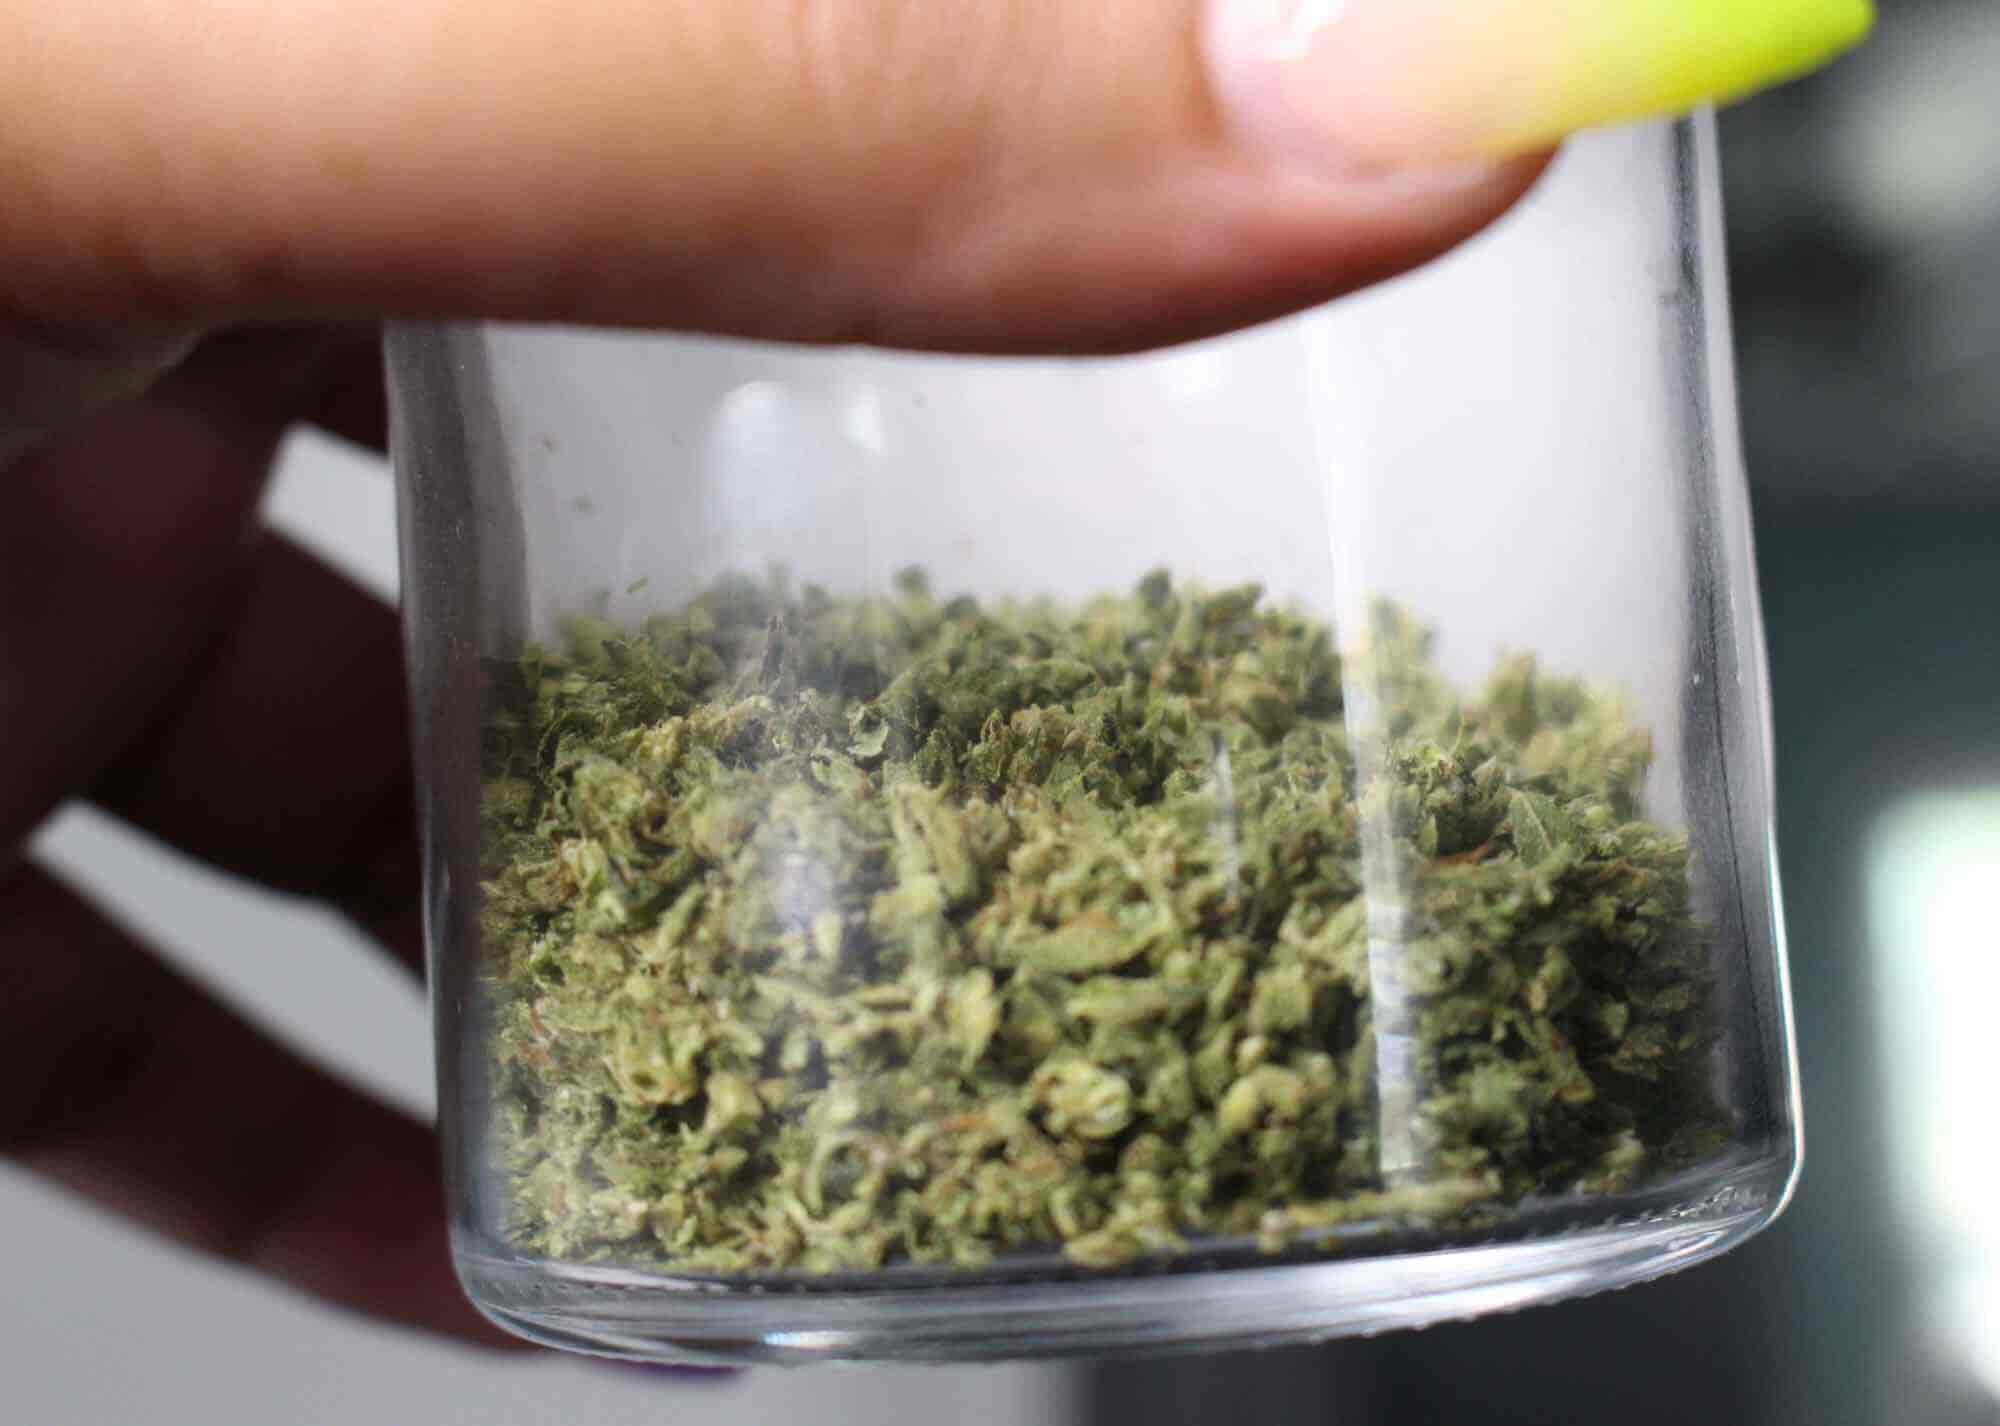 Dried cannabis buds in jar